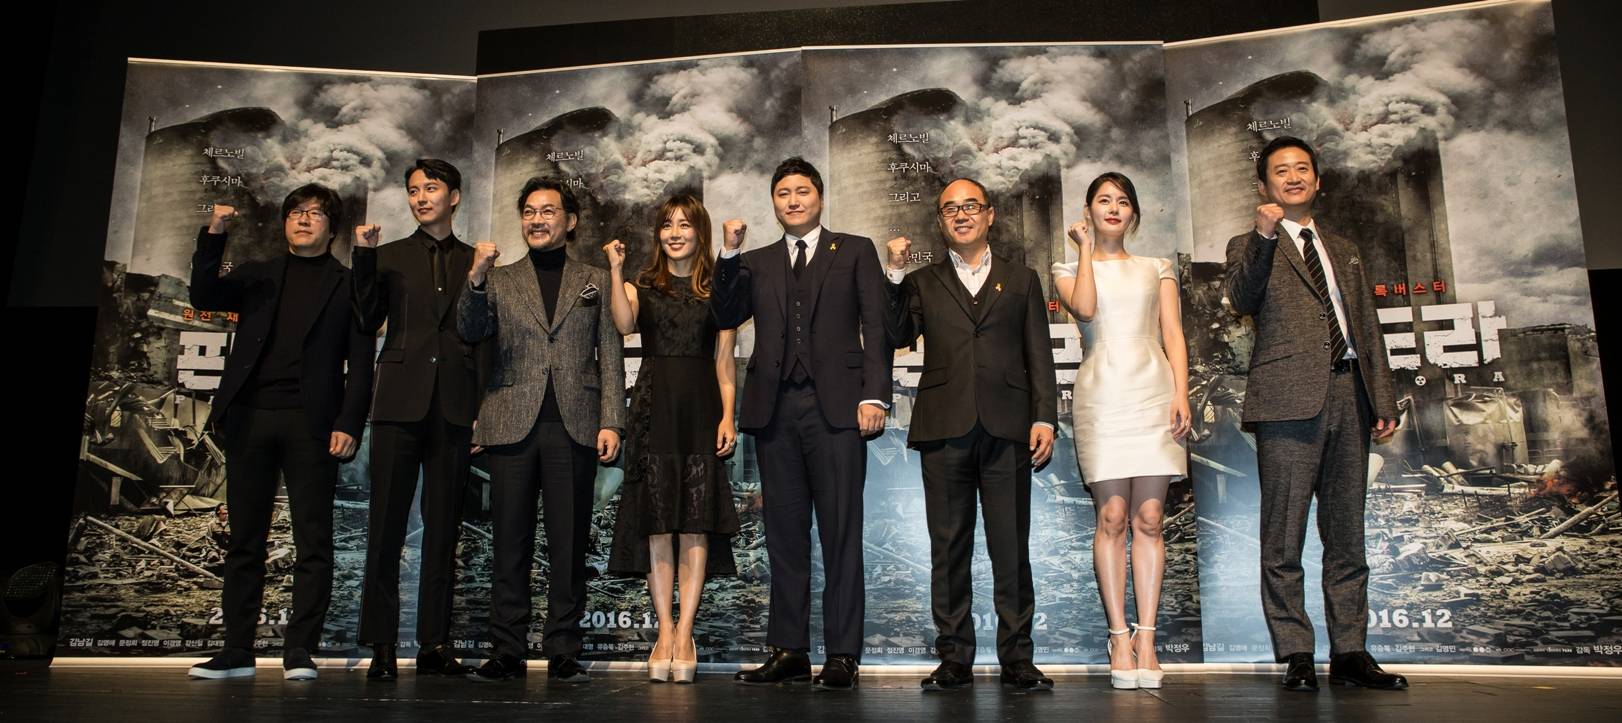 photos press conference images upcoming korean movie pandora